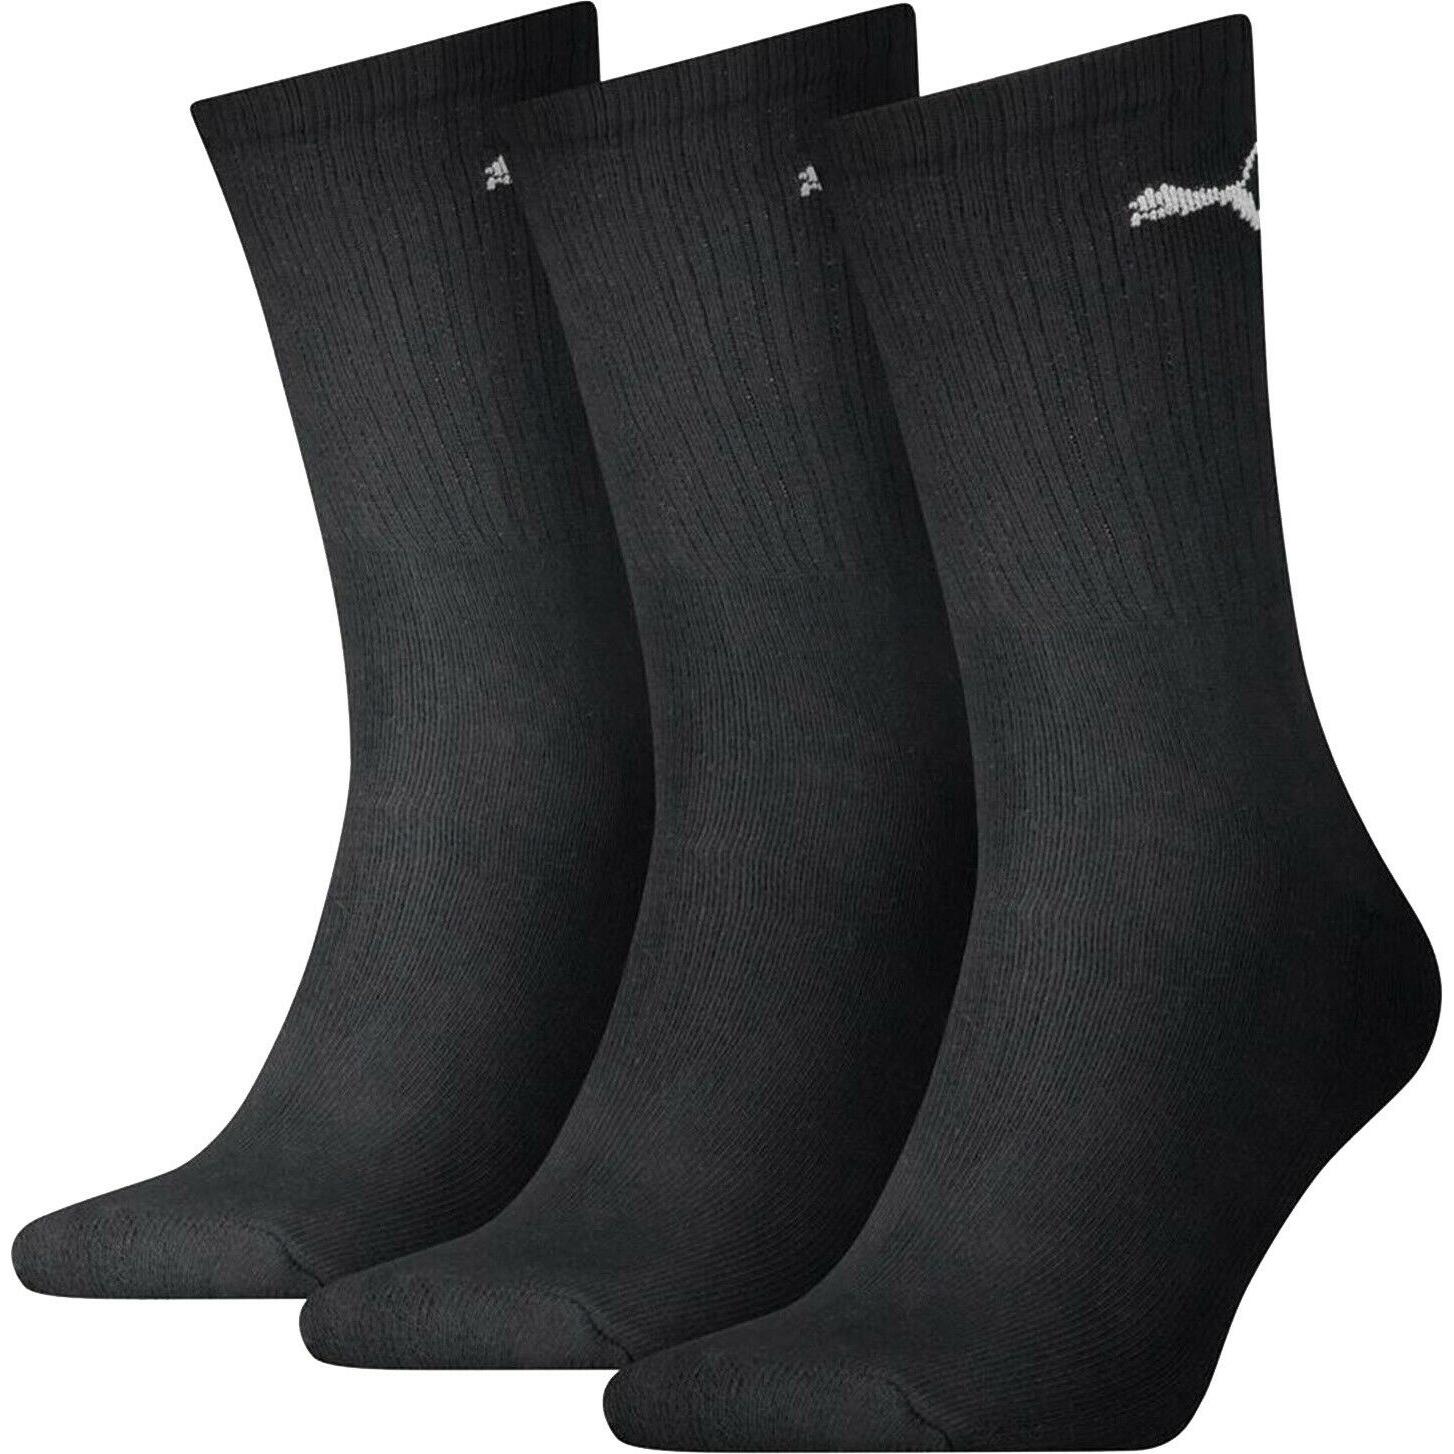 Unisex Adult Crew Sports Socks (Pack of 3) (Black) 2/3